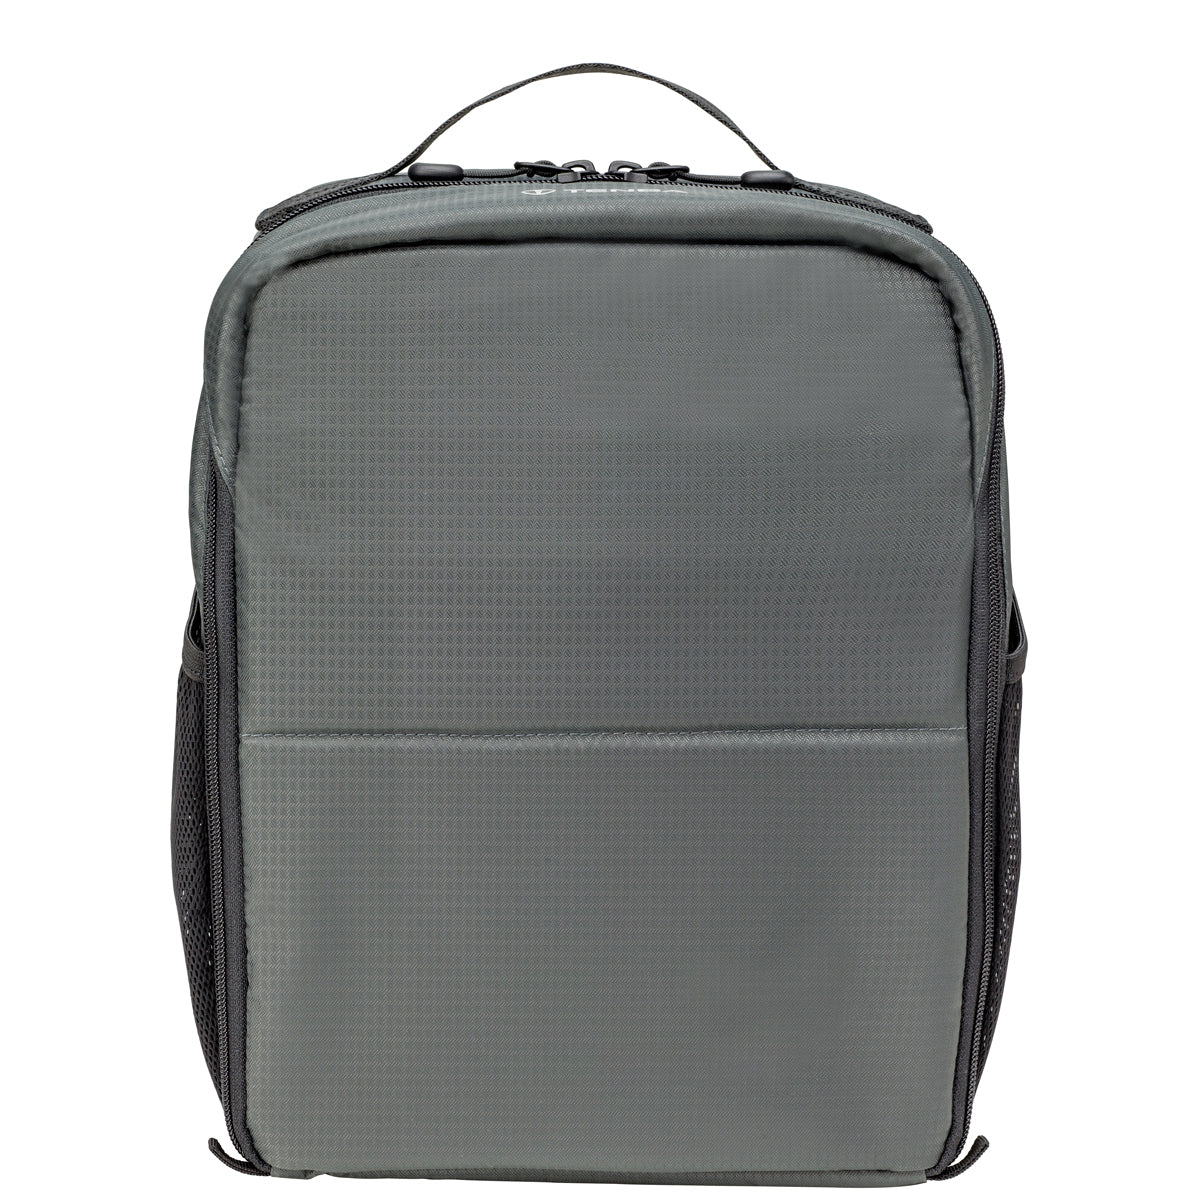 Tenba BYOB 10 DLSR Backpack Insert (Gray)